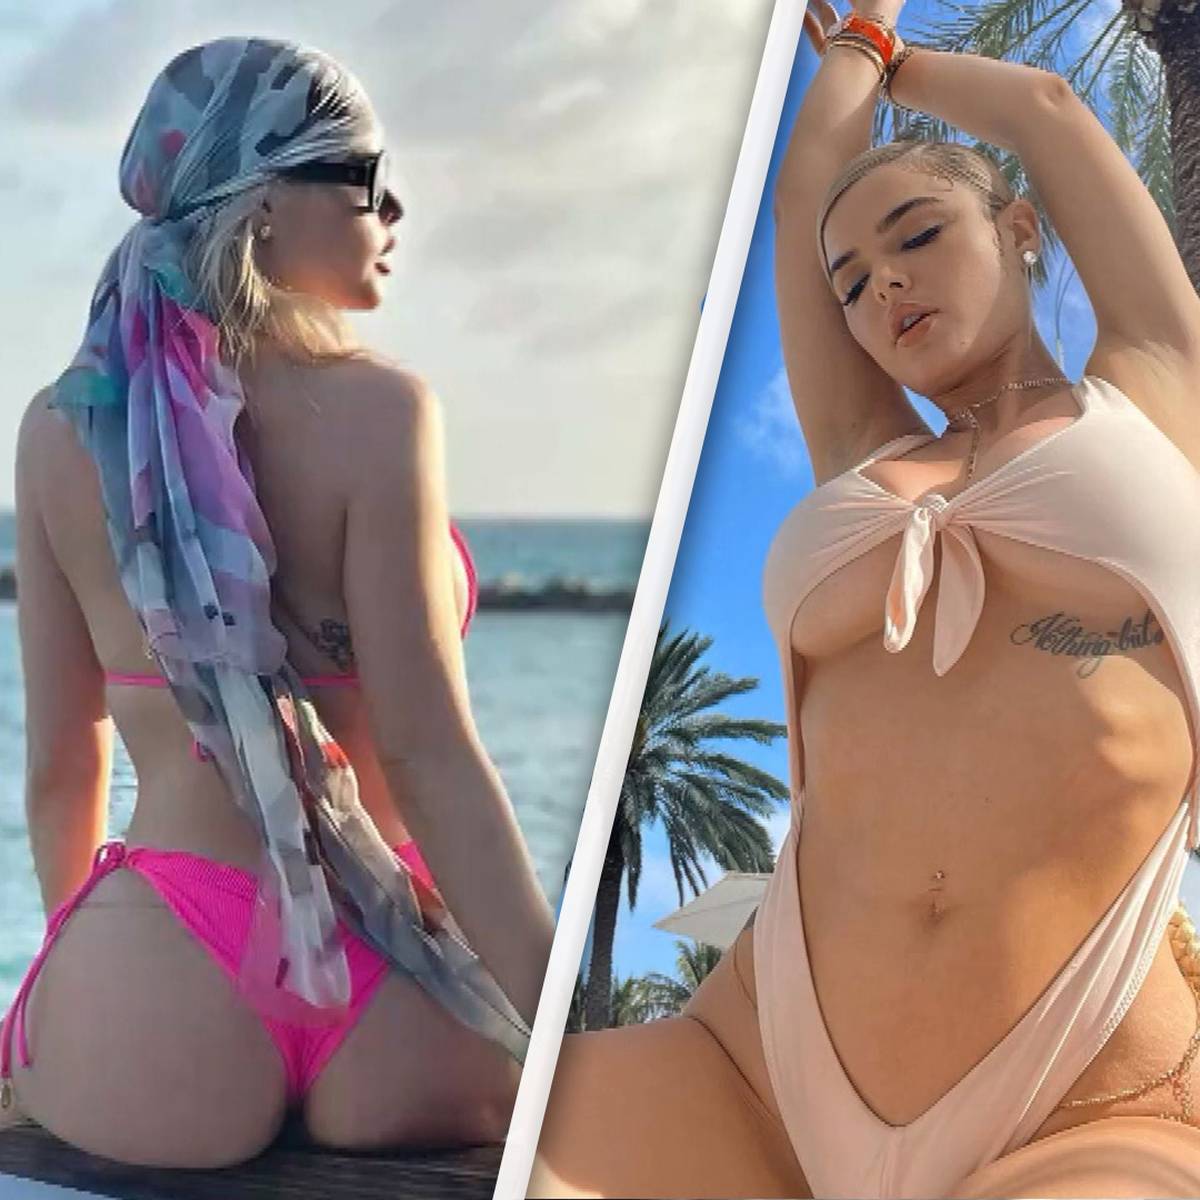 Heiße Bikinifotos! Mayweather-Freundin schickt sexy Urlaubsgrüße